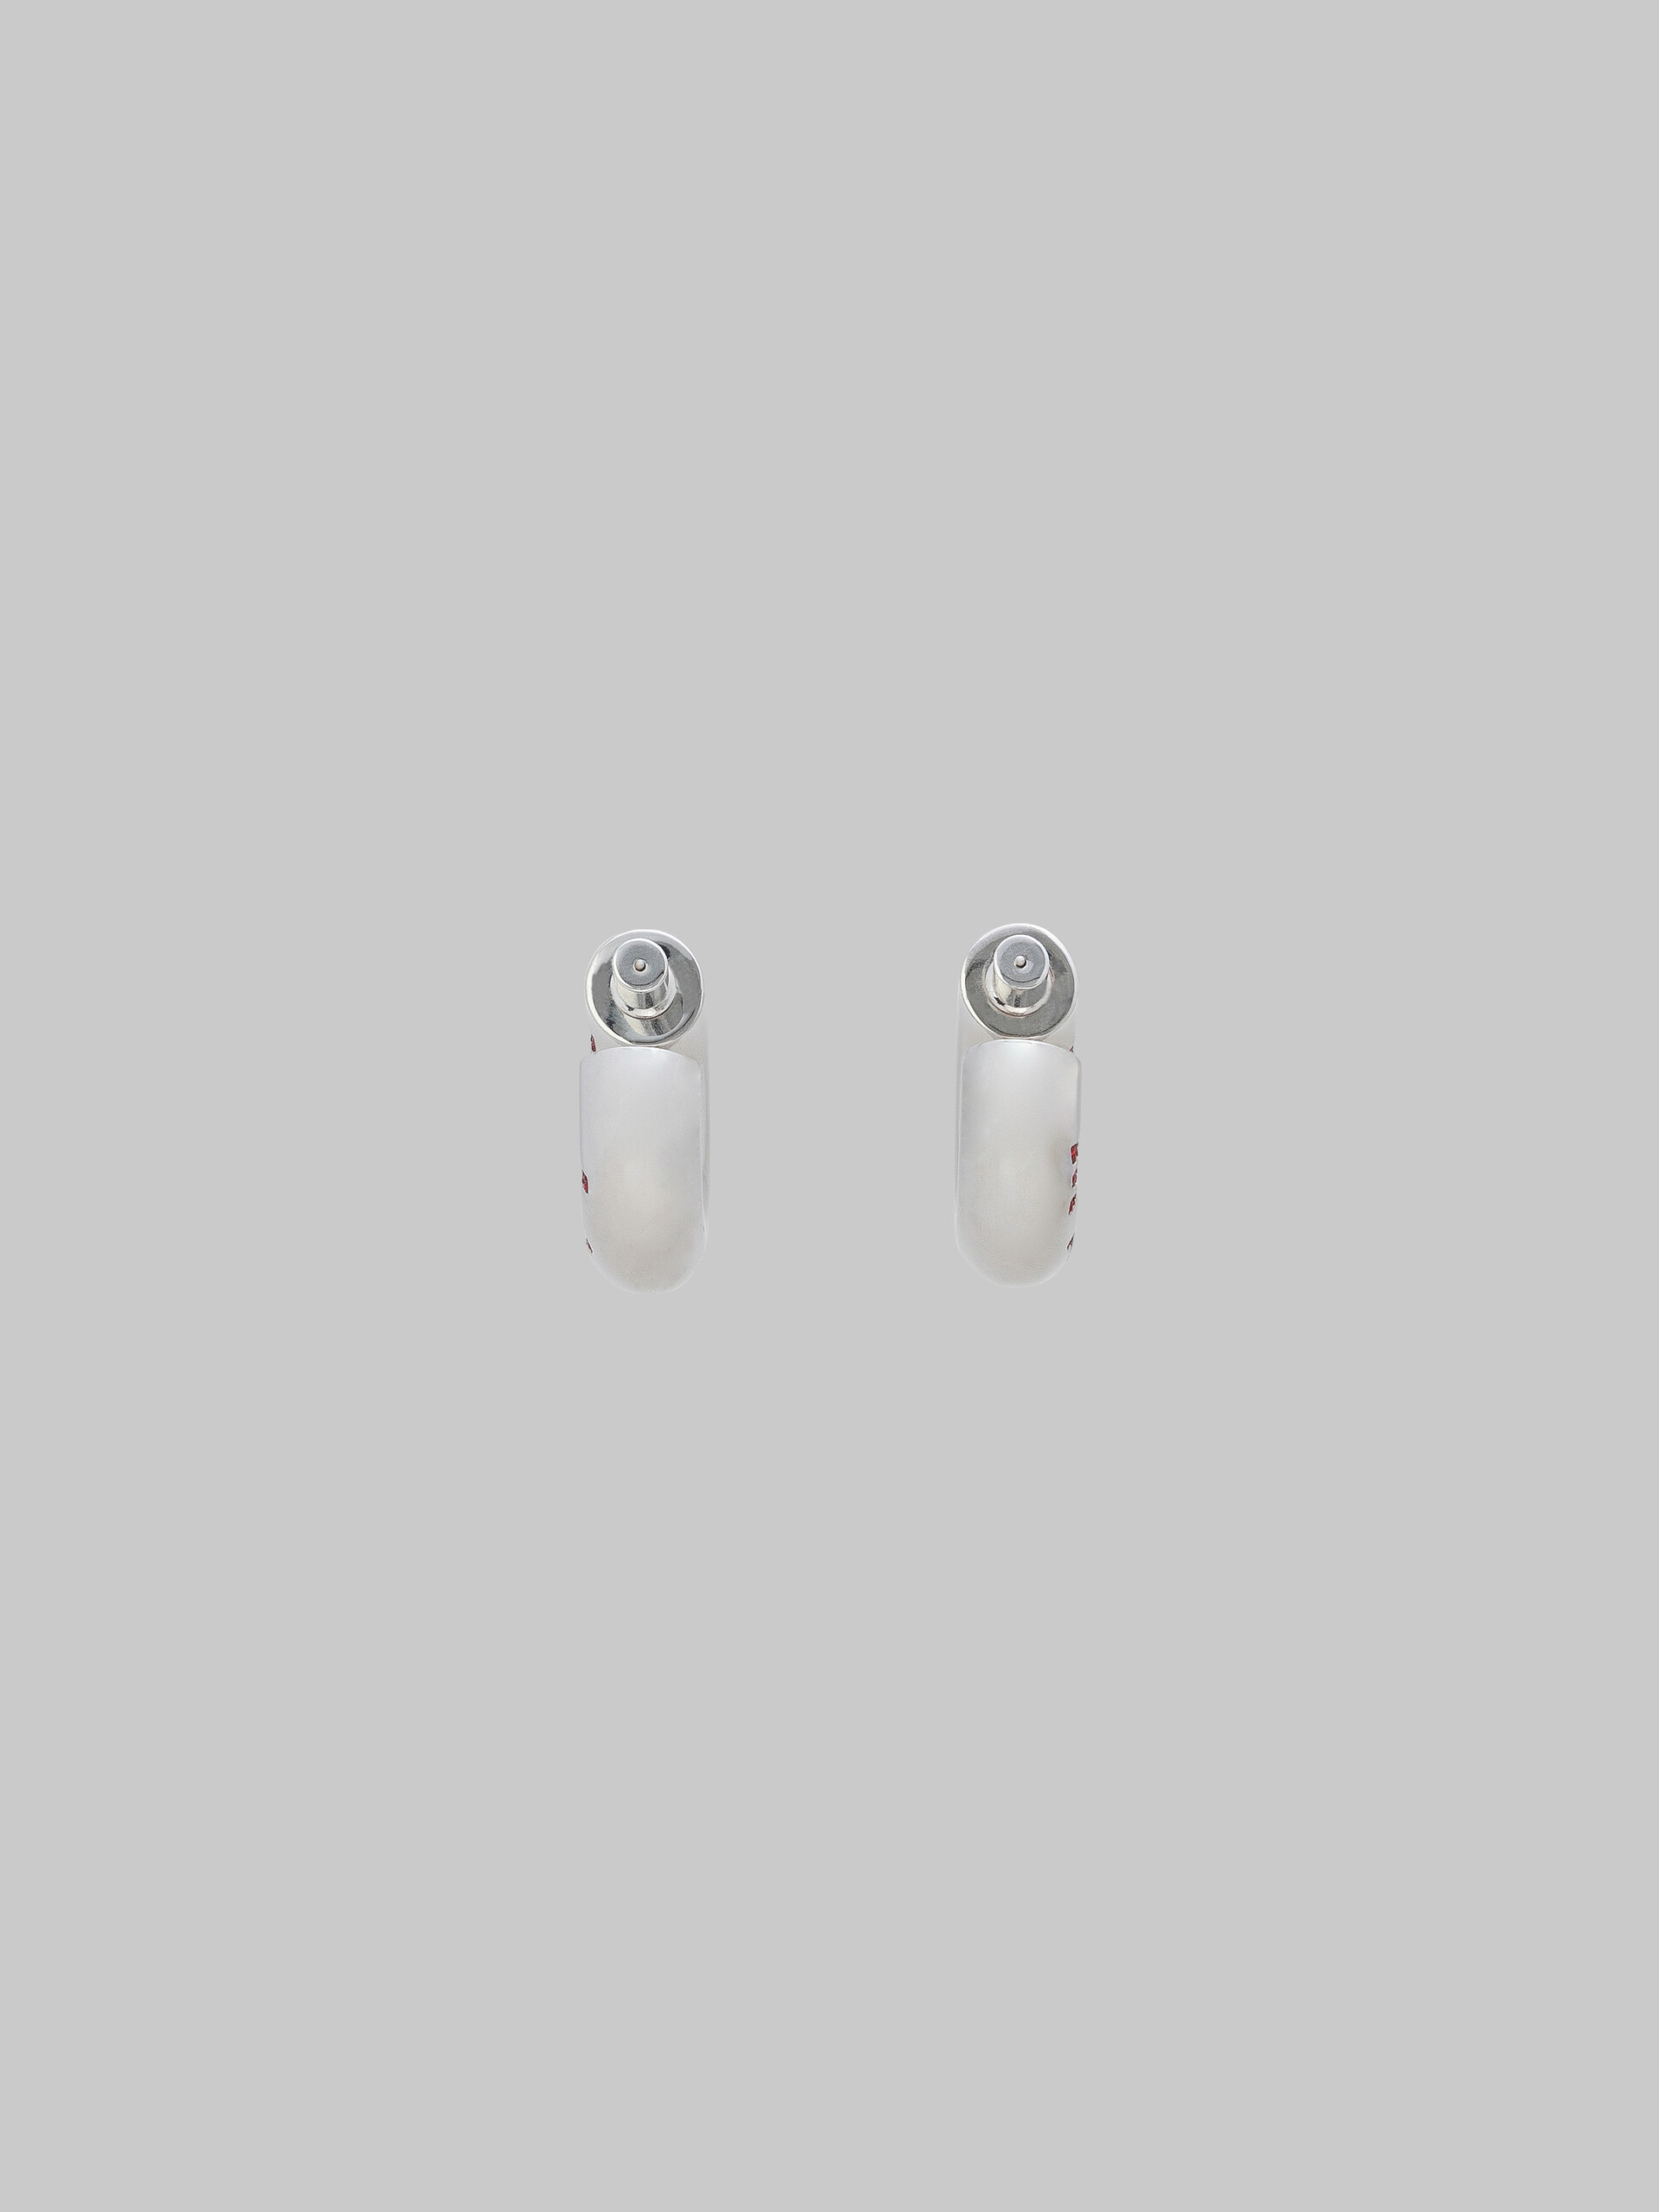 Silver tube earrings with rhinstone Marni logo - Earrings - Image 3